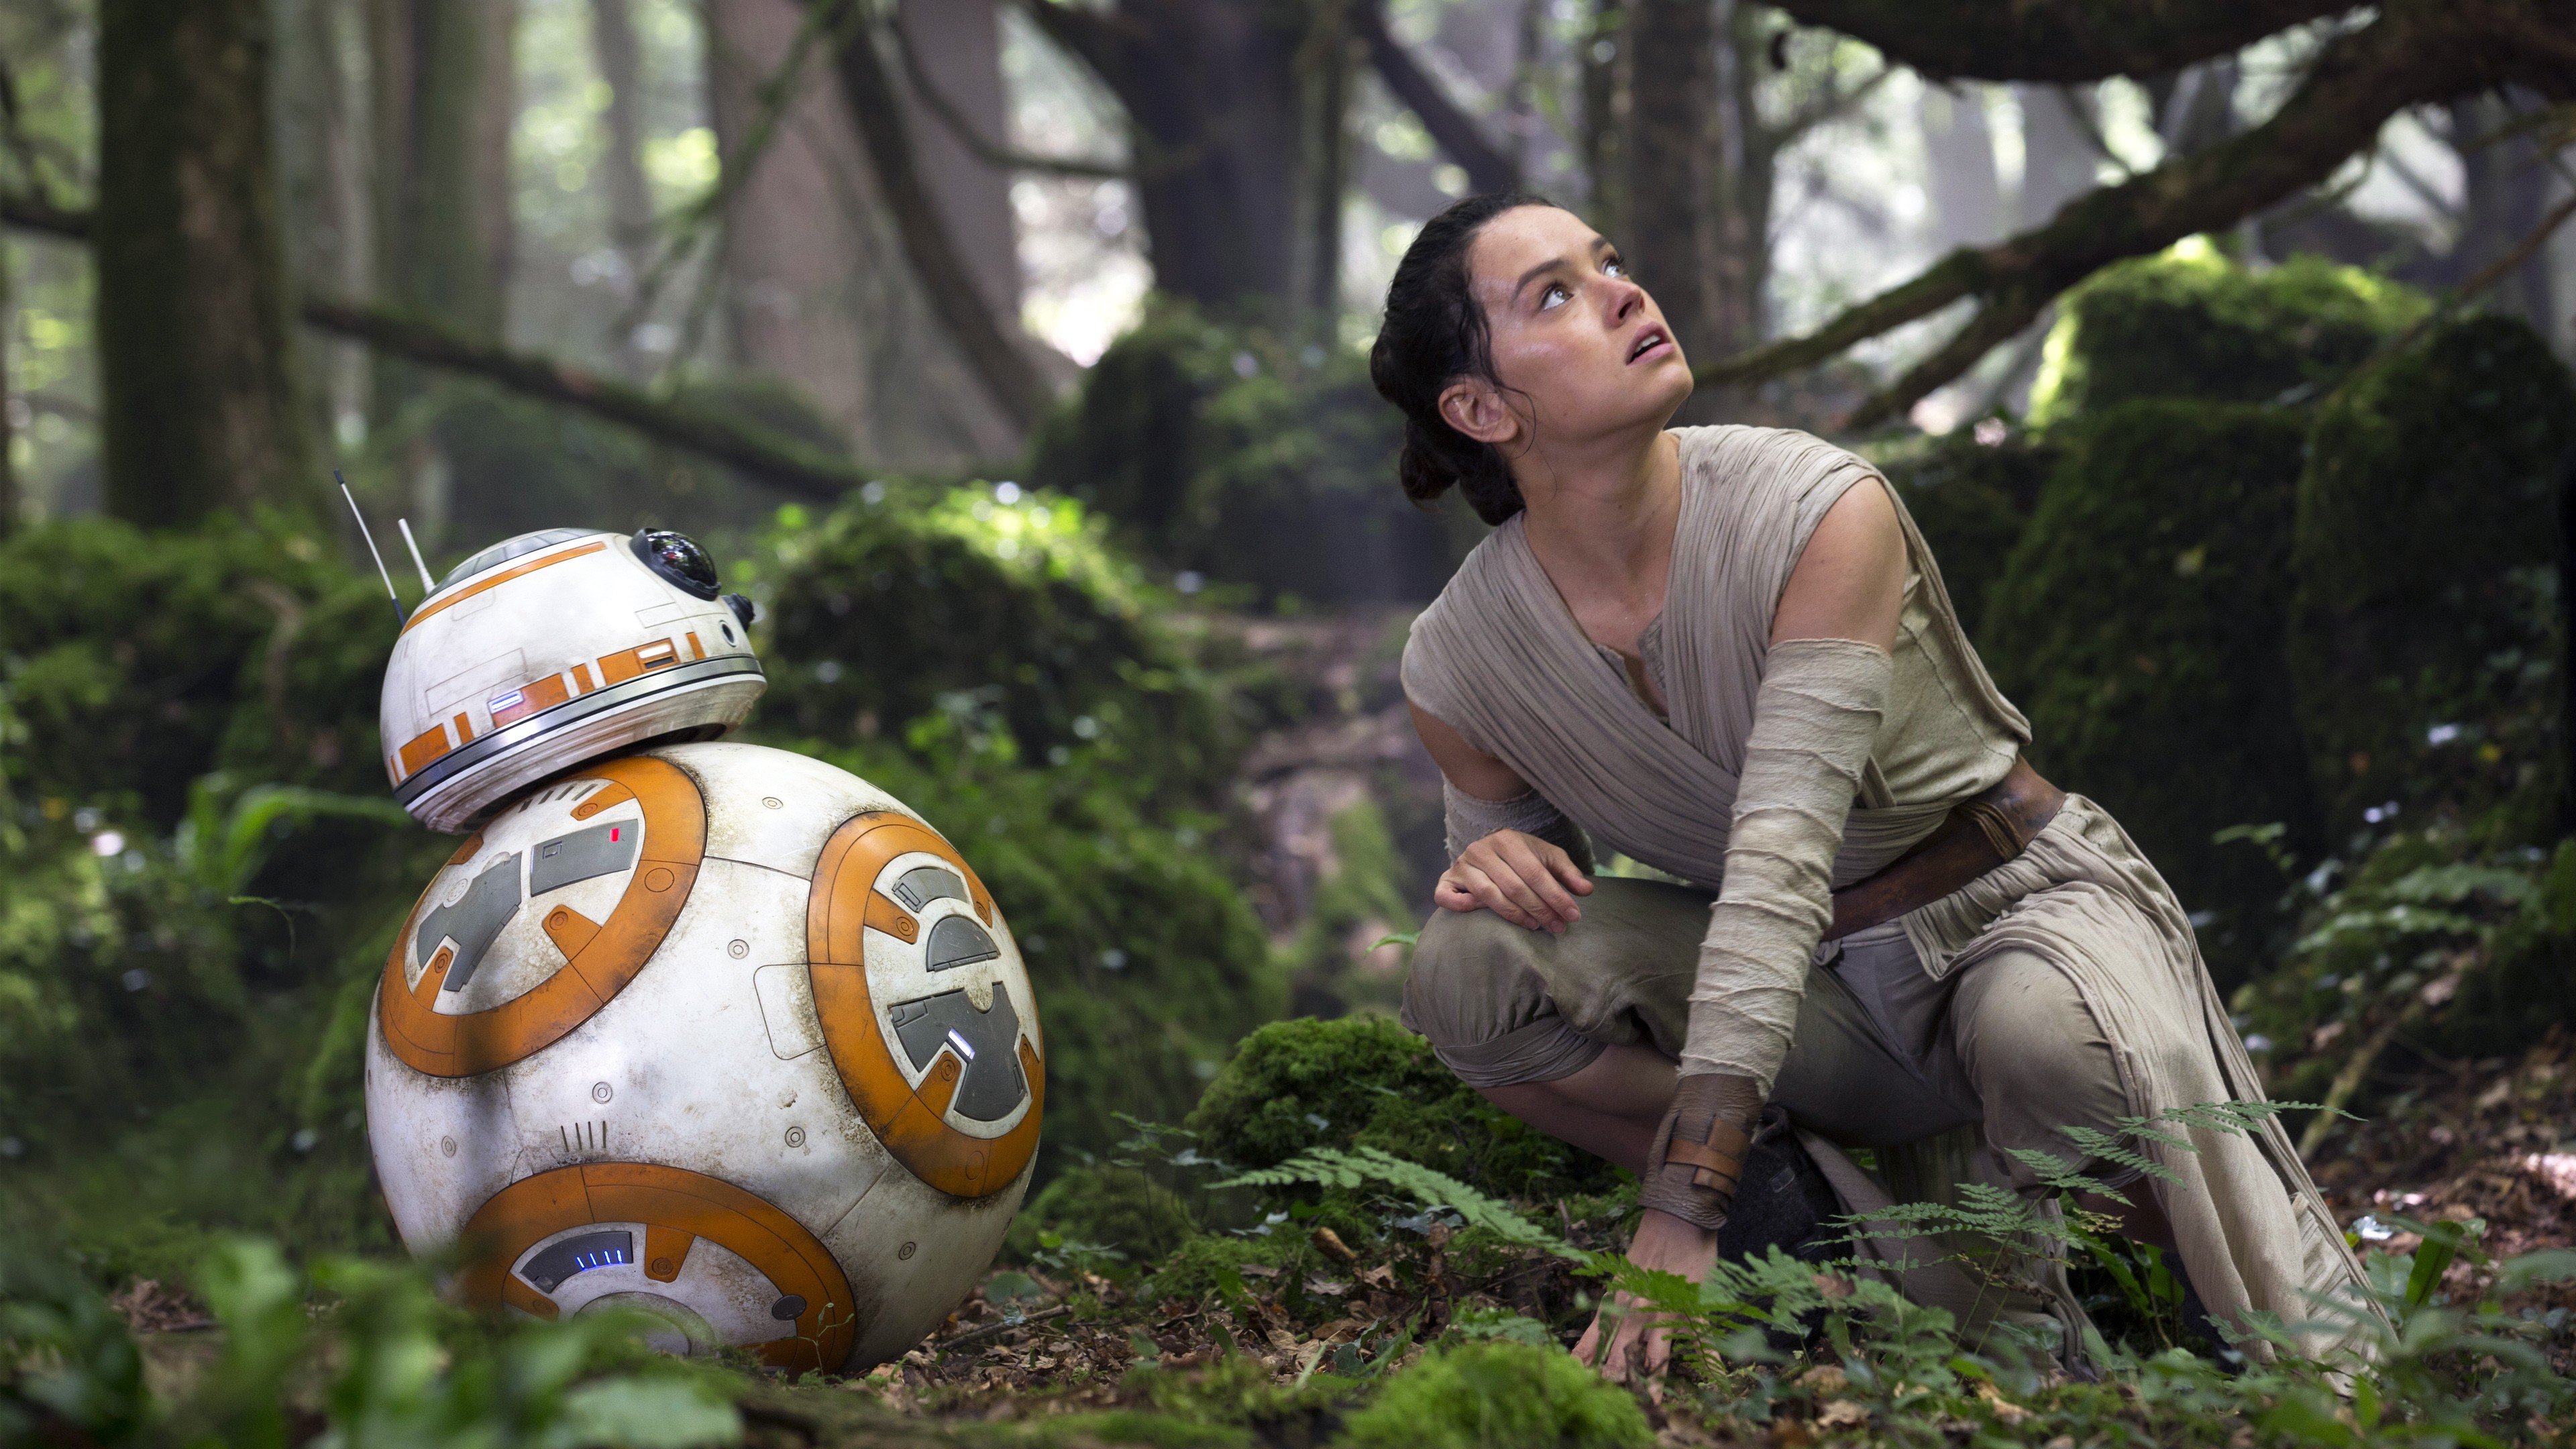 Star Wars Star Wars The Force Awakens Daisy Ridley BB 8 Movies Star Wars Droids Science Fiction Rey  3840x2160